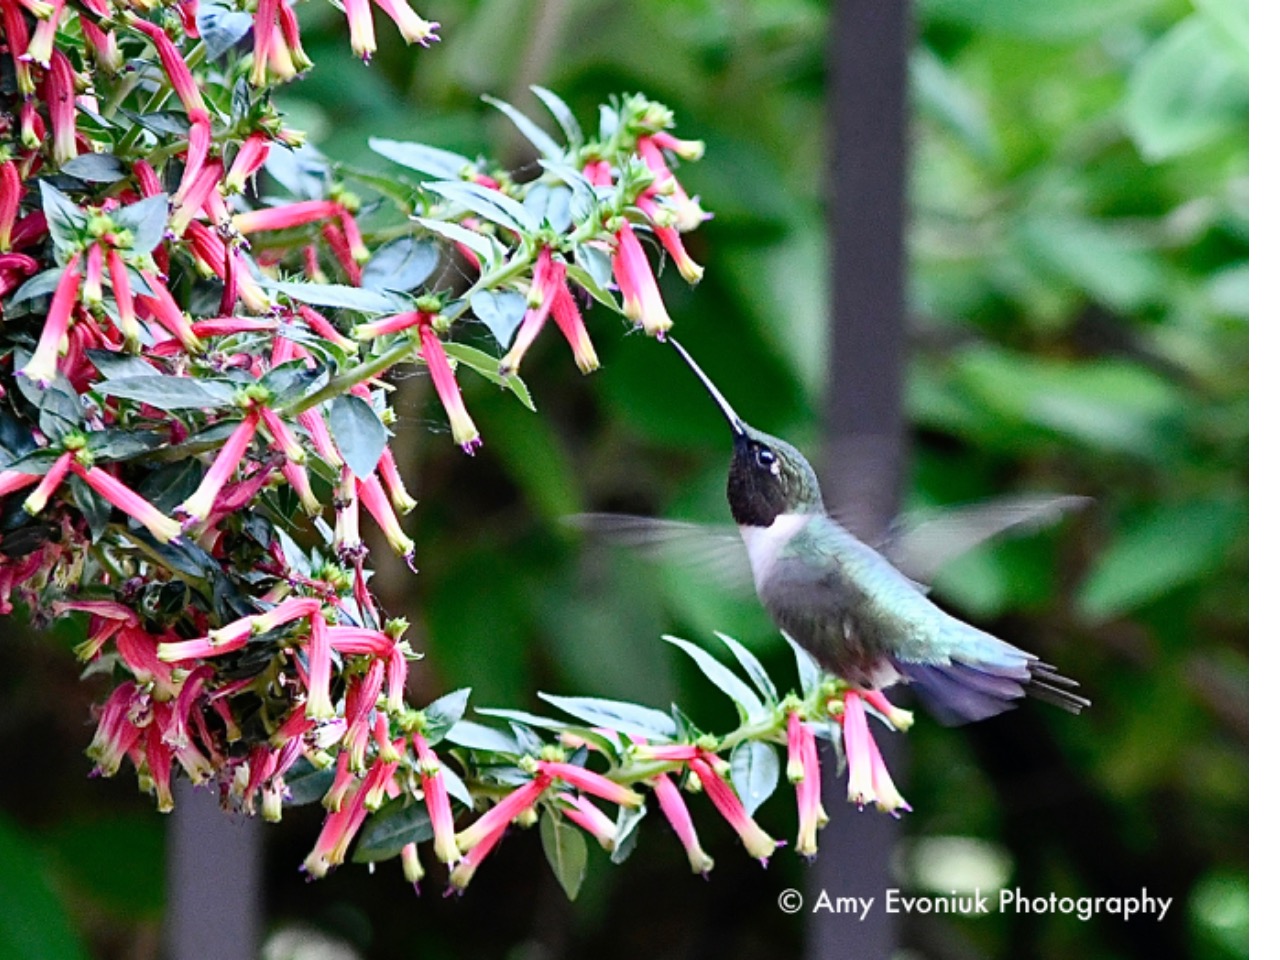 Hummingbird nectaring on flowers